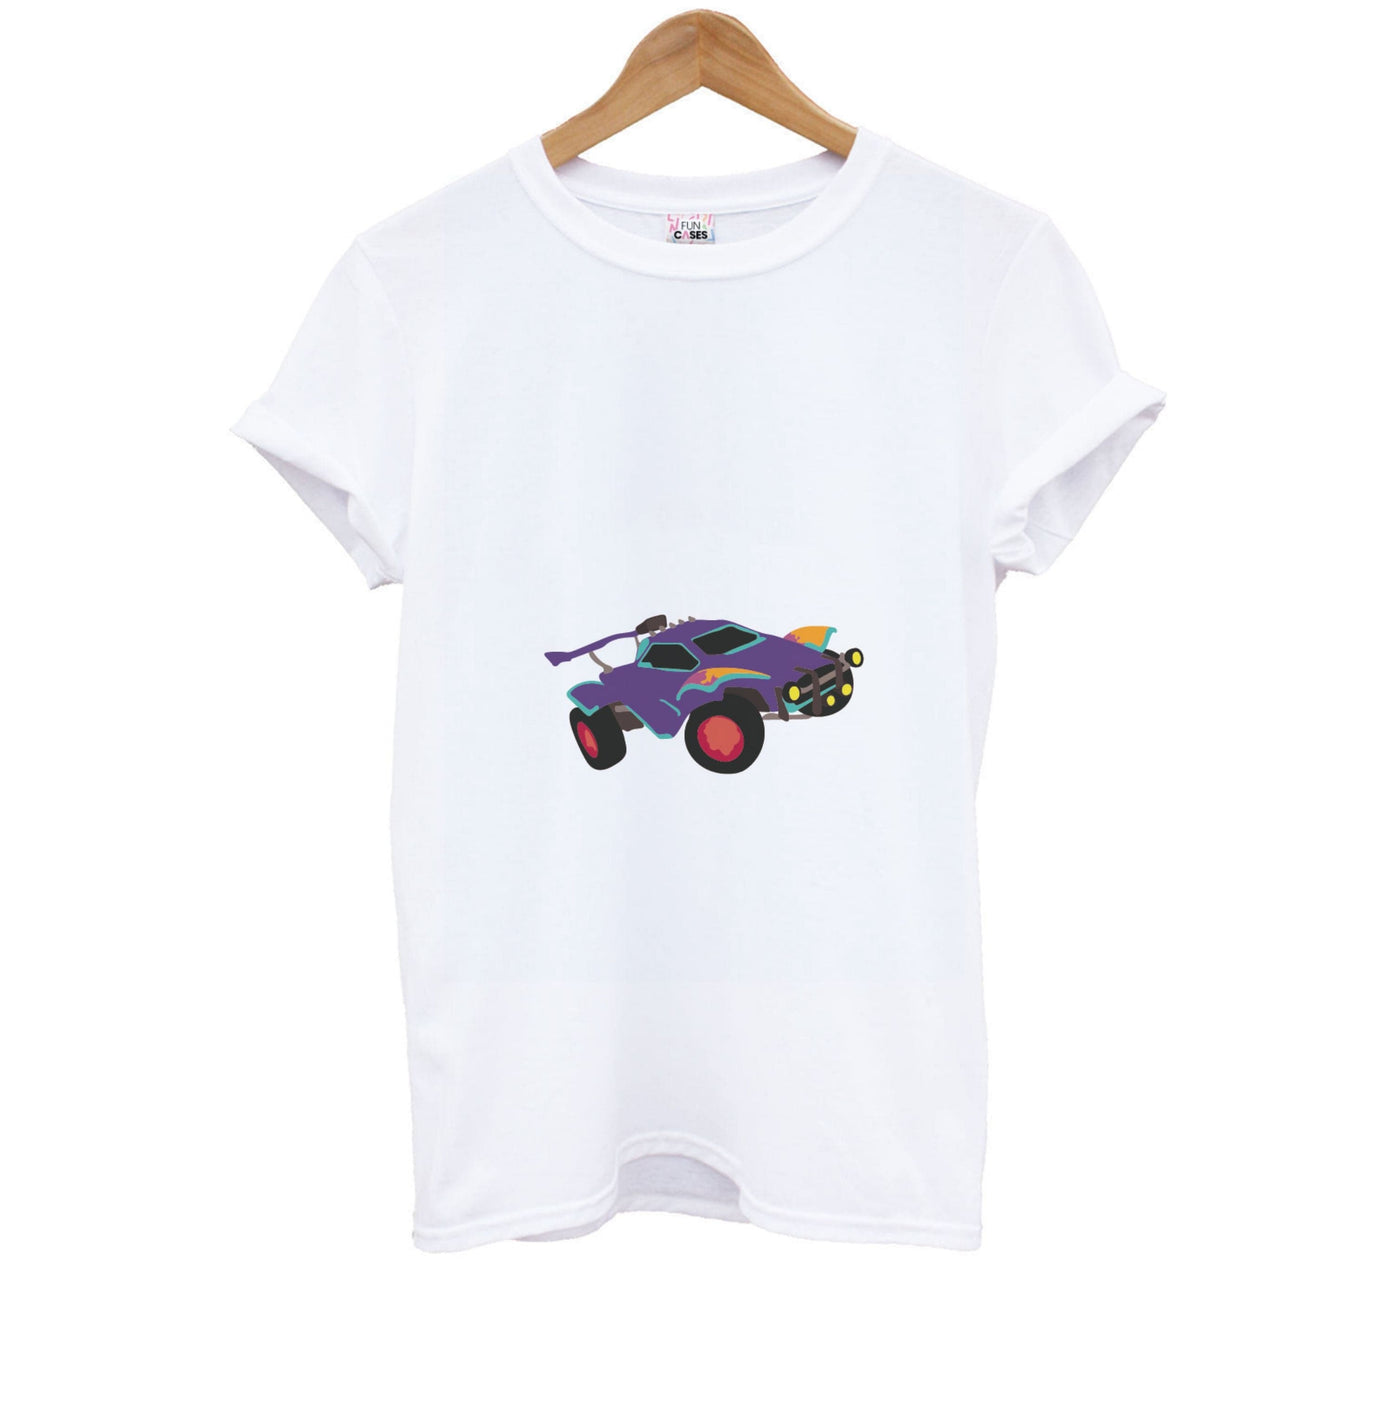 Purple Octane - Rocket League Kids T-Shirt